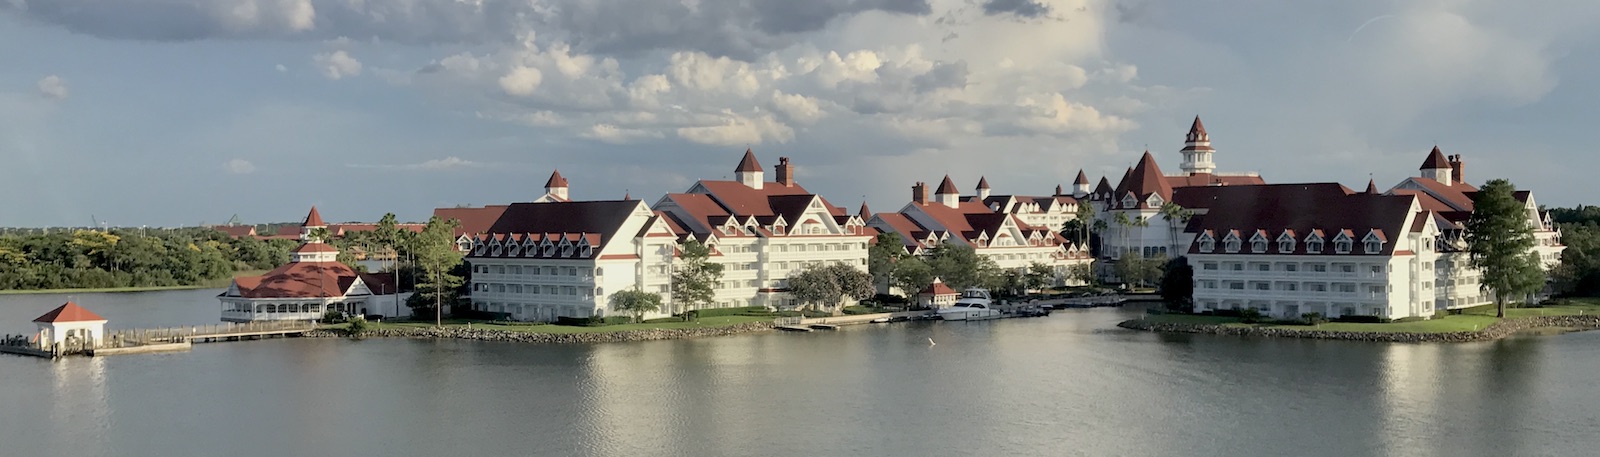 Villas at Disney's Grand Floridian Resort